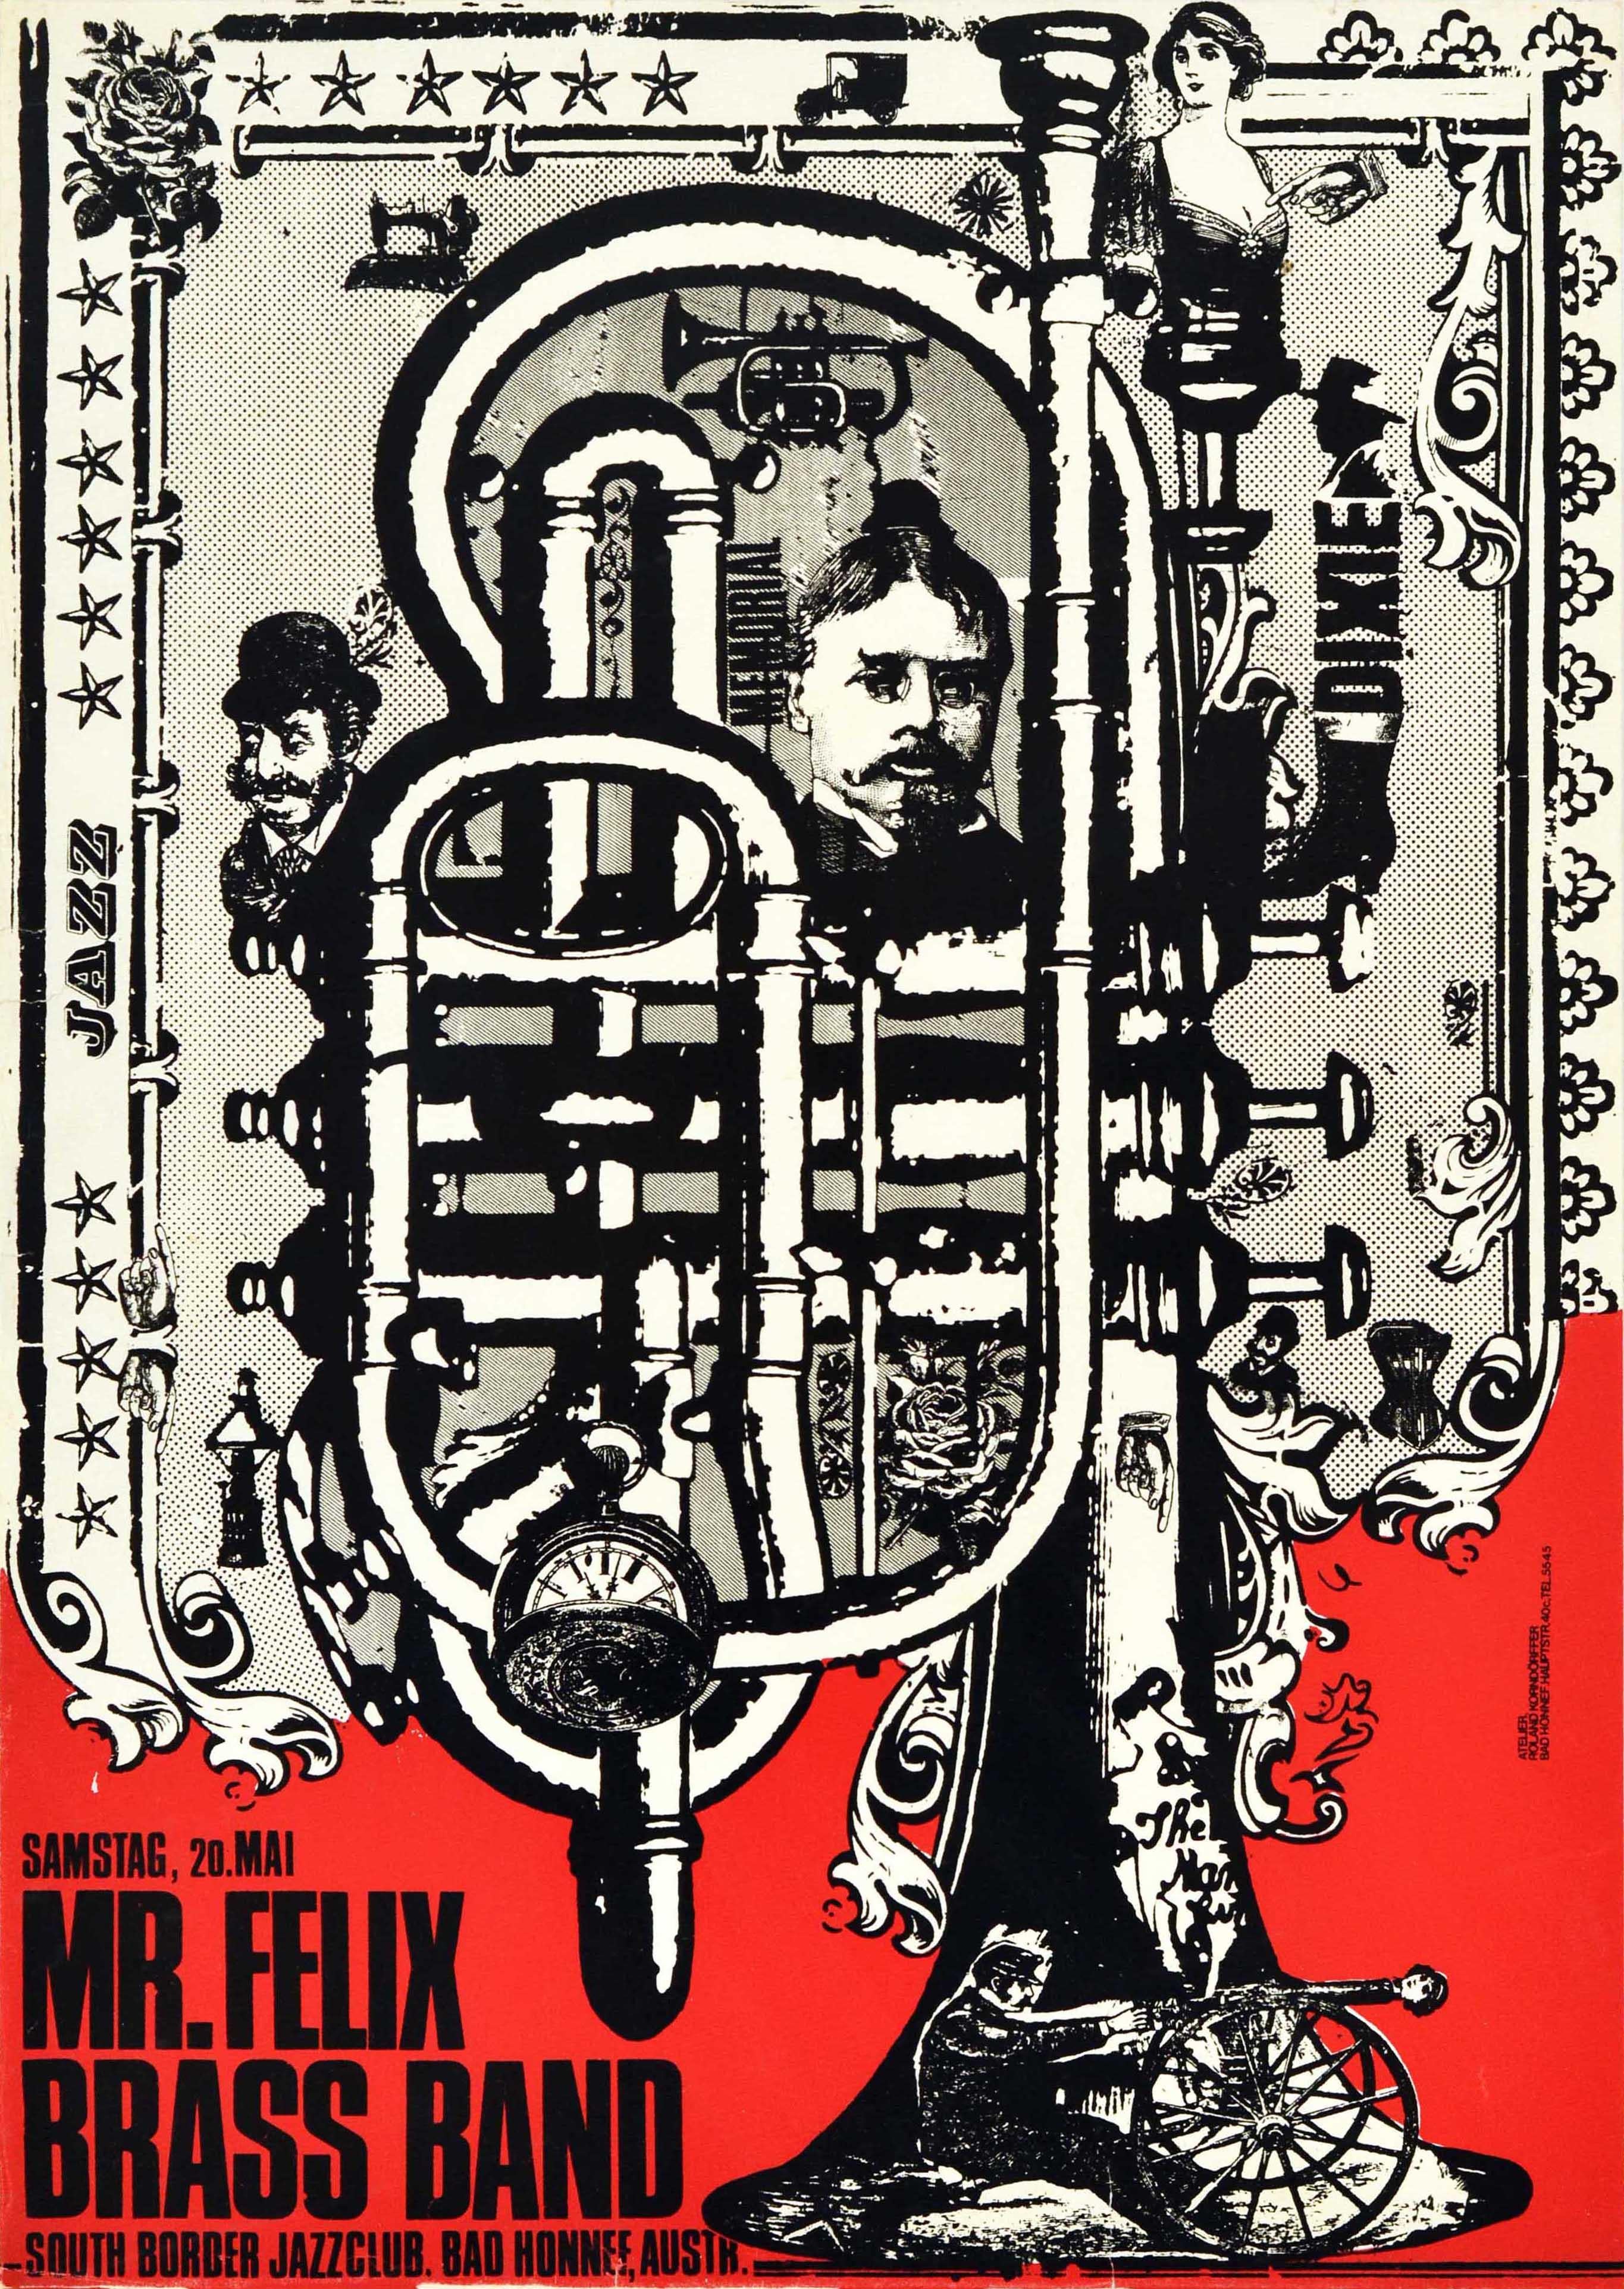 Unknown Print - Original Vintage Music Poster Mr Felix Brass Band South Border Jazz Club Dixie